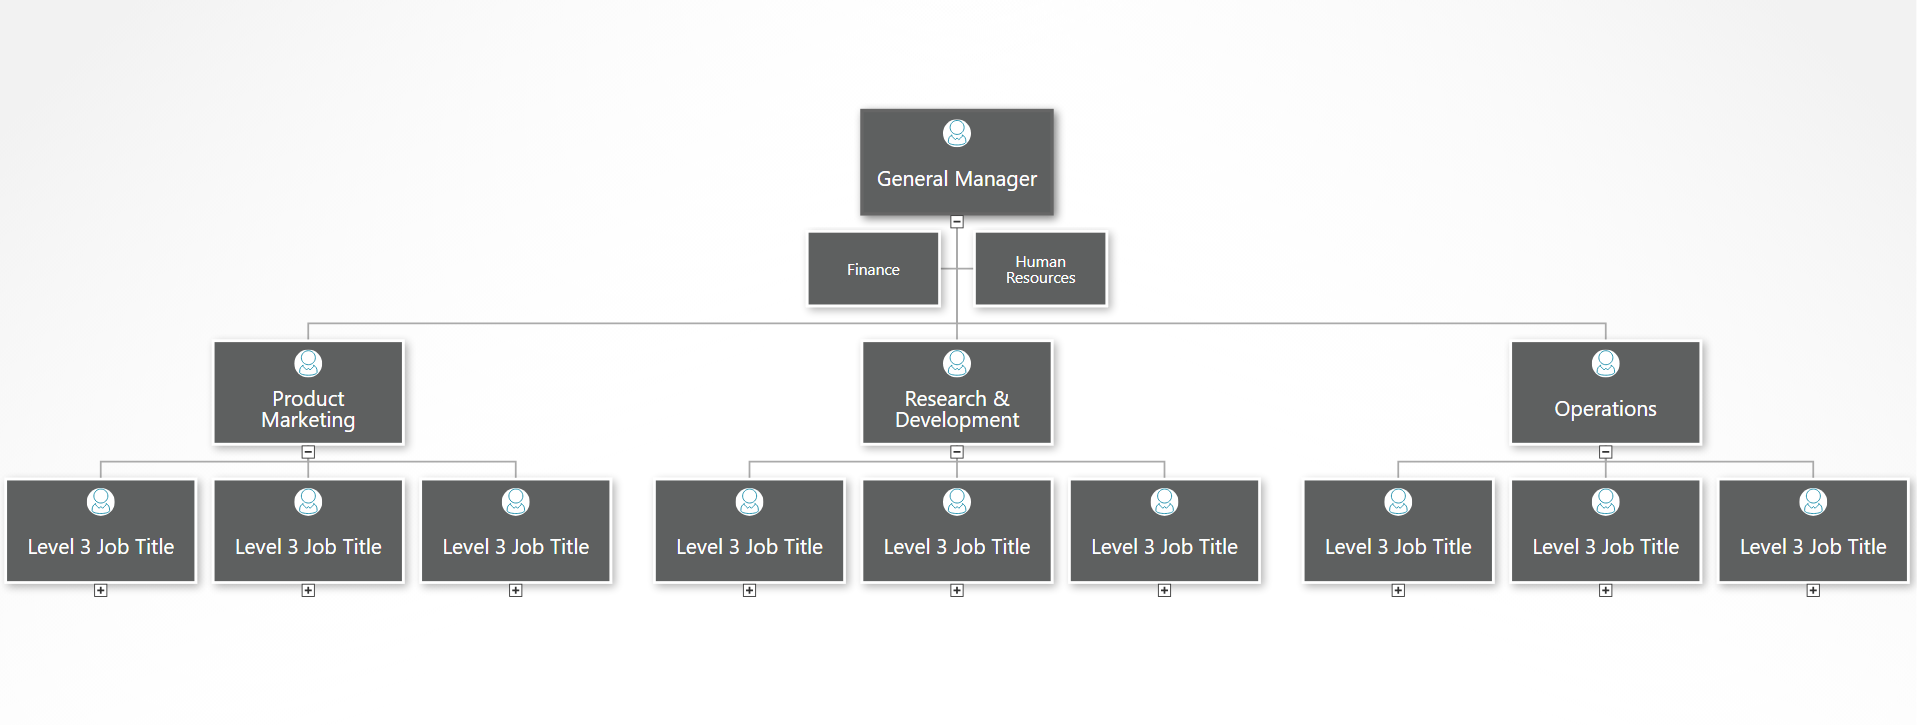 Functional organizational chart